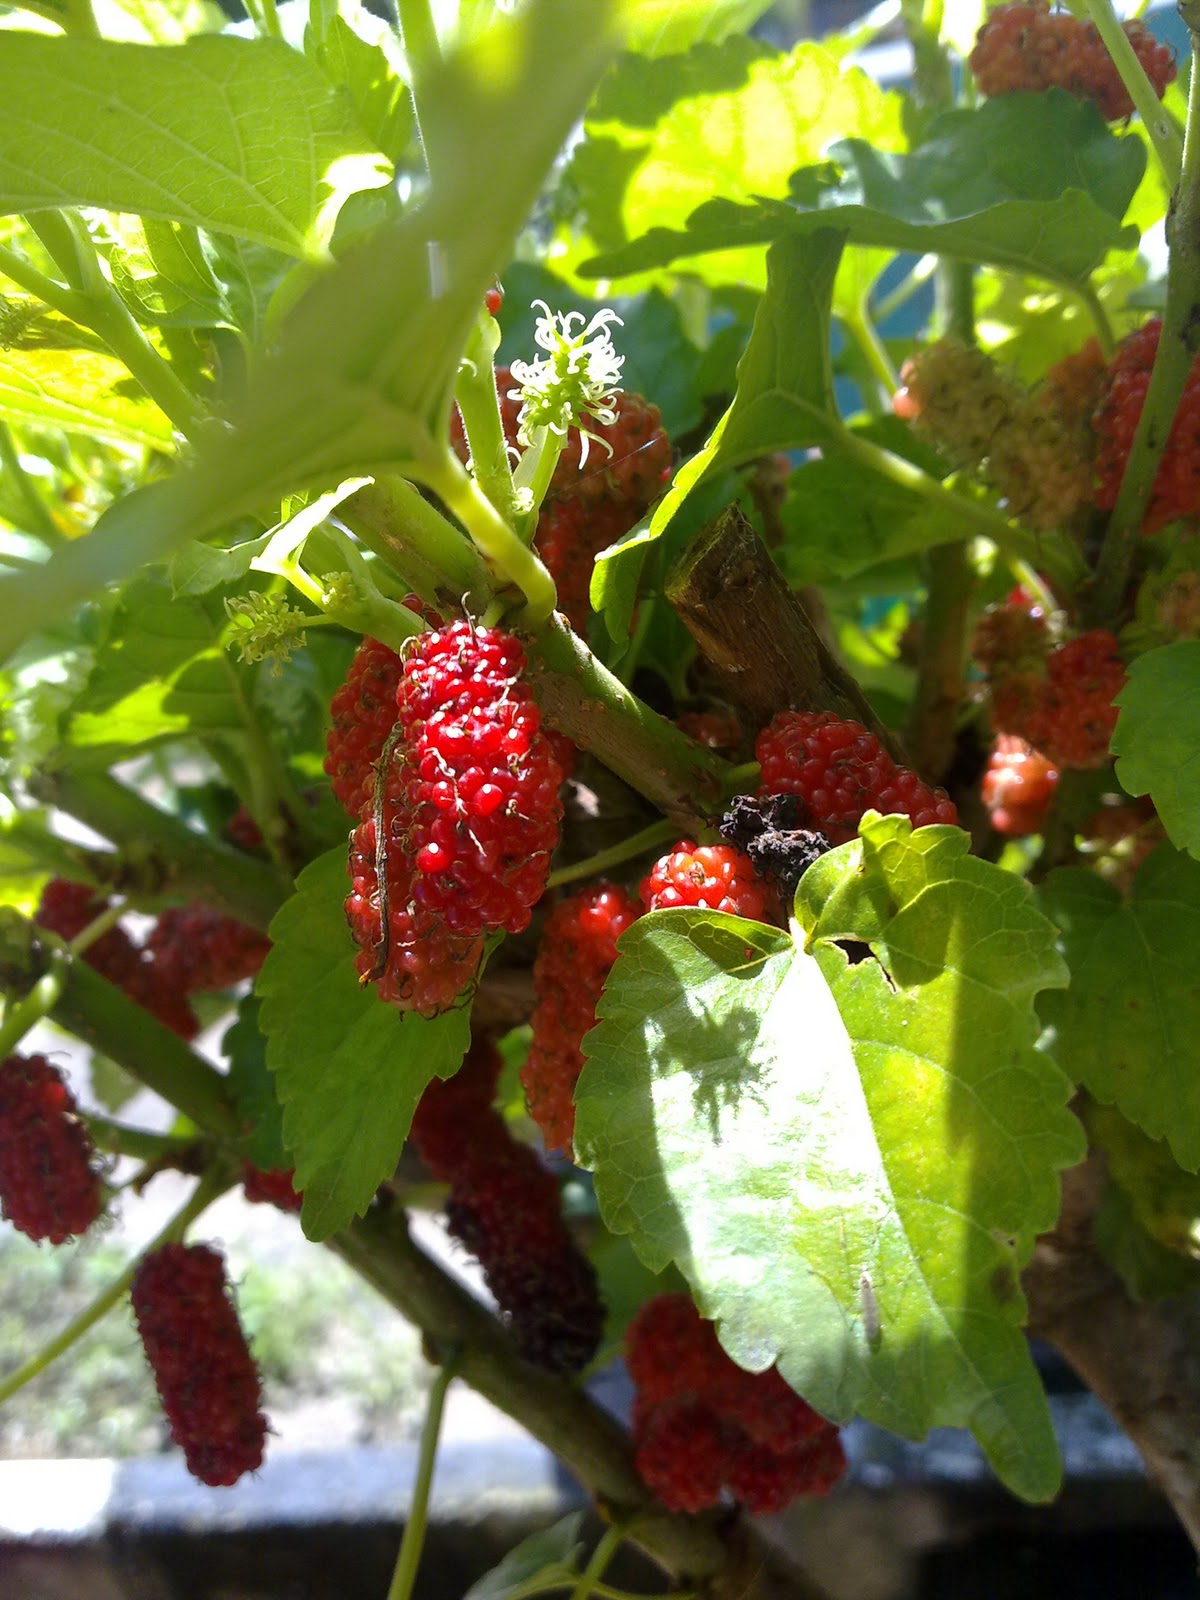 Anita_fauzie: khasiat buah mulbery